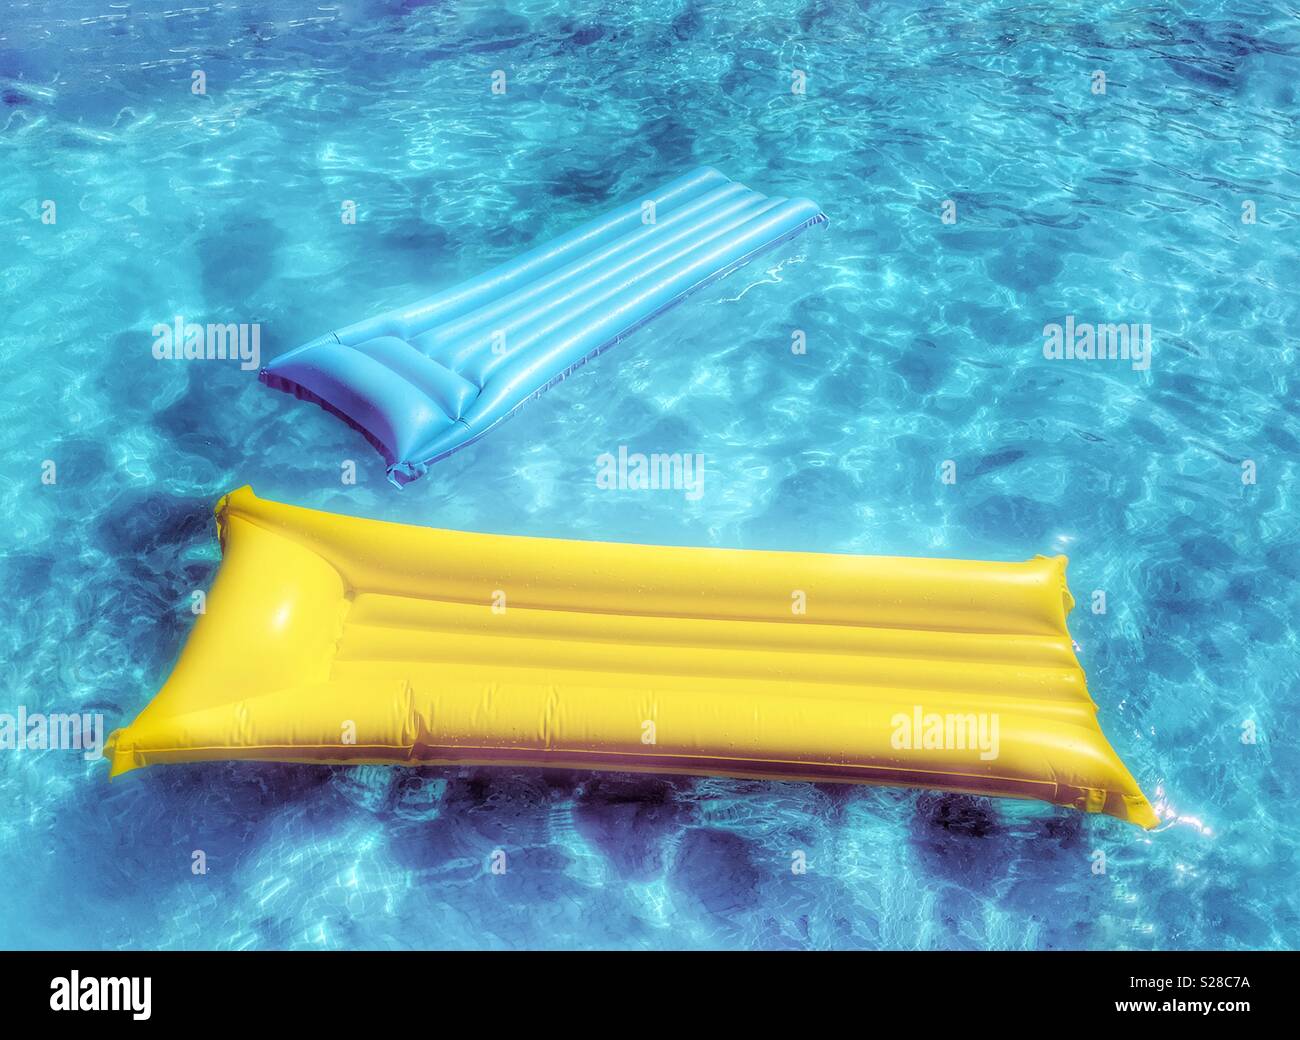 Giallo e blu di materassini gonfiabili floating in blu piscina Foto Stock